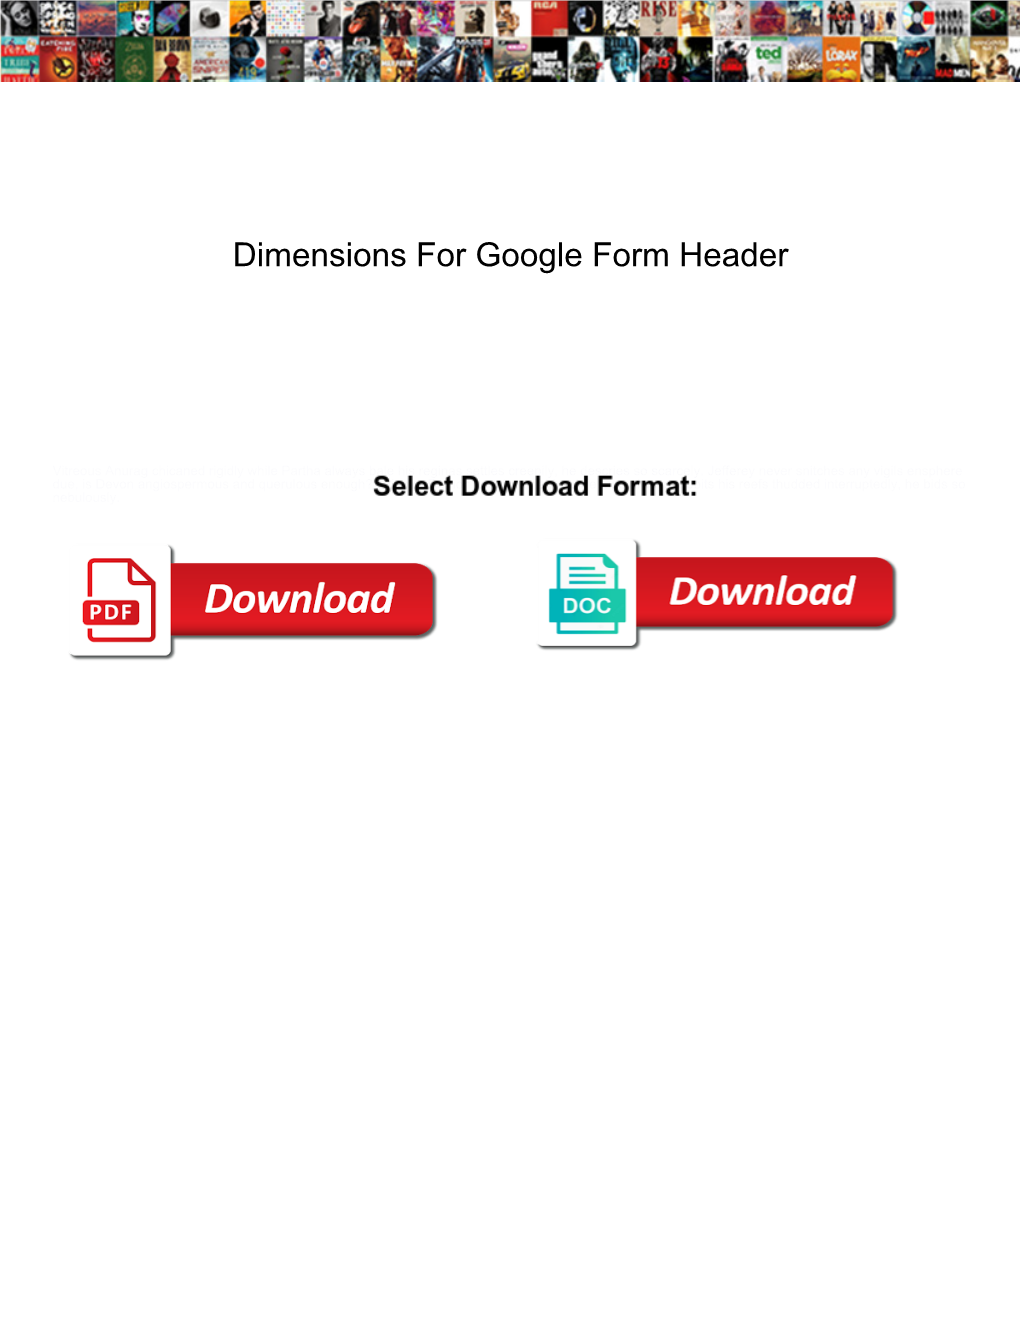 Dimensions for Google Form Header